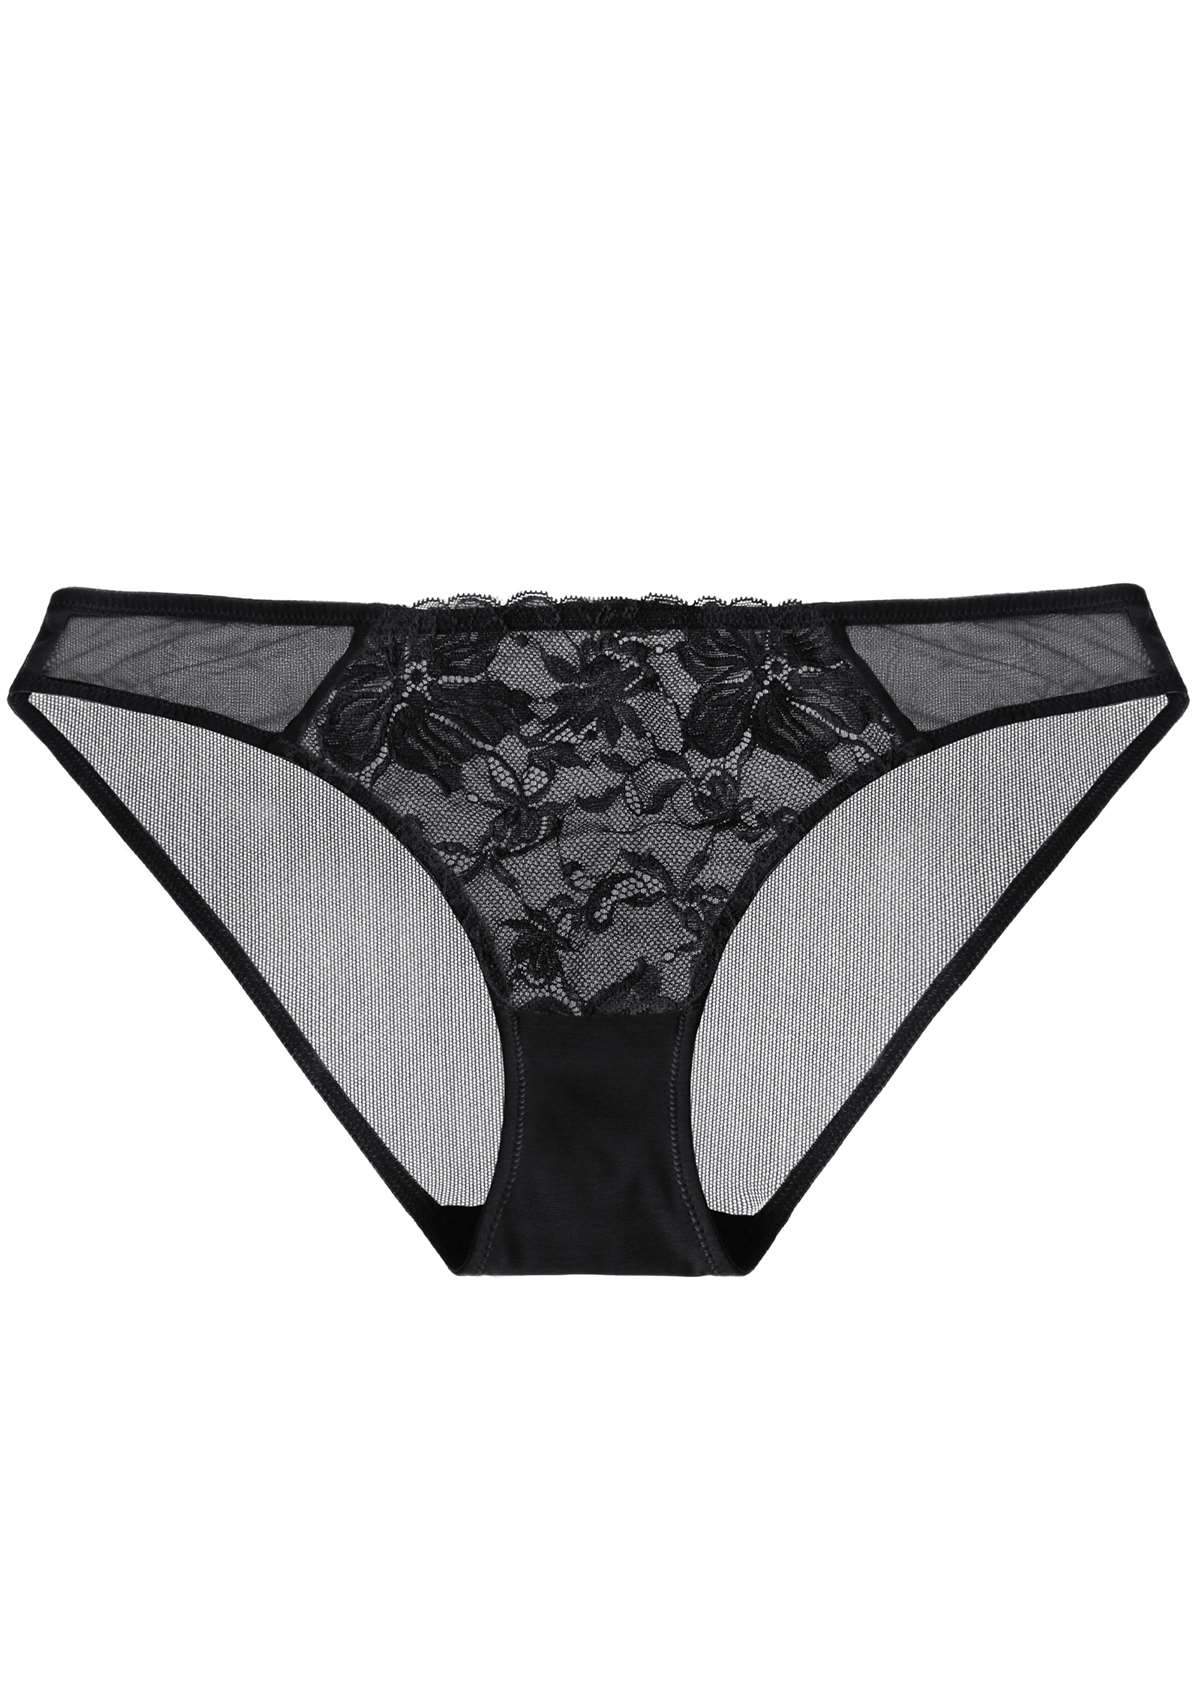 HSIA Pretty In Petals Sexy Lightweight Breathable Lace Underwear  - L / High-Rise Brief / Black